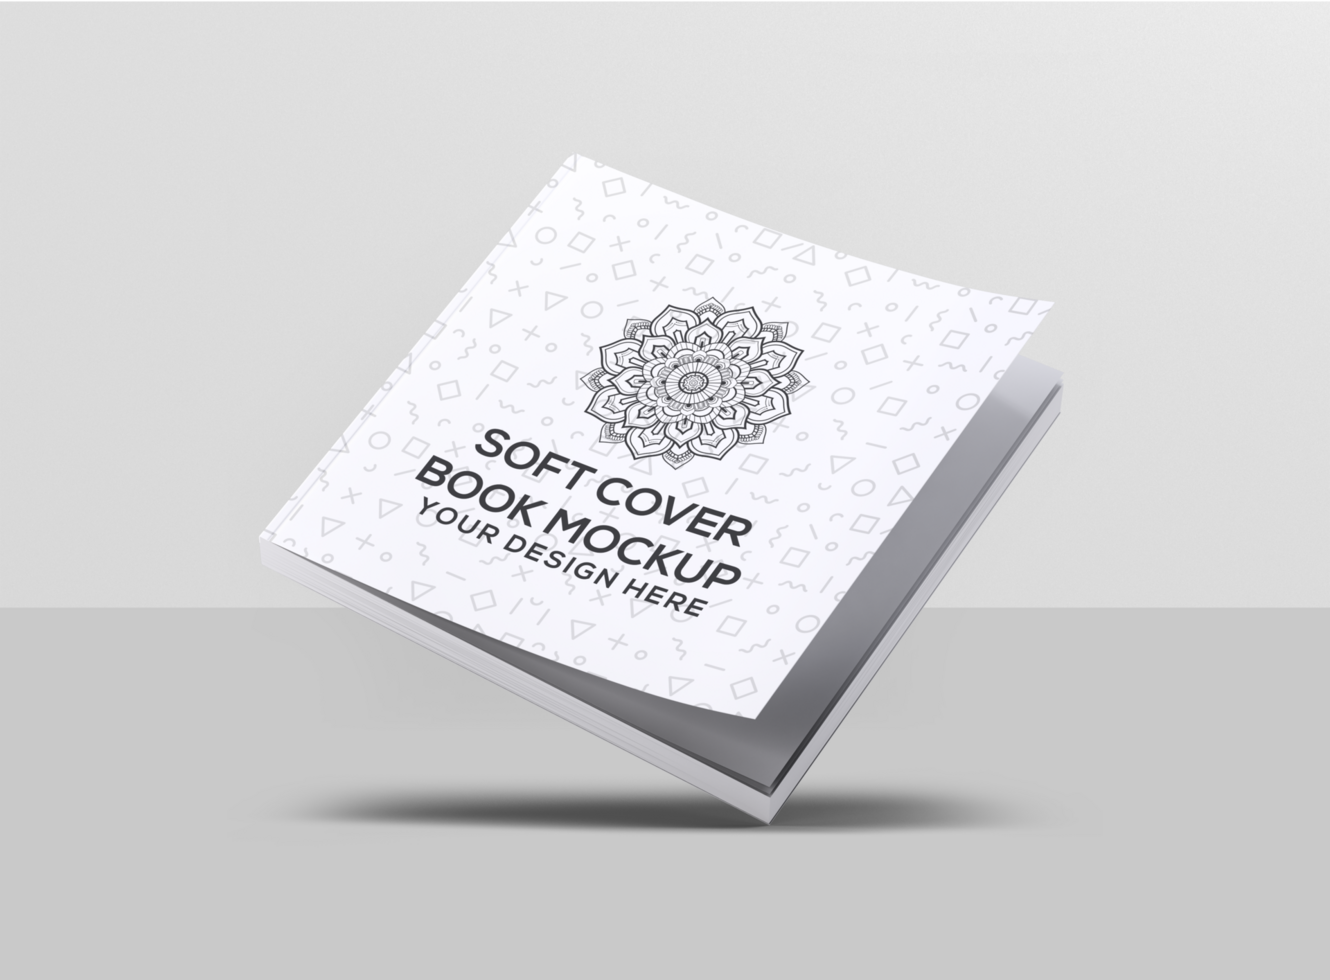 Soft Cover Square Book Mockup psd